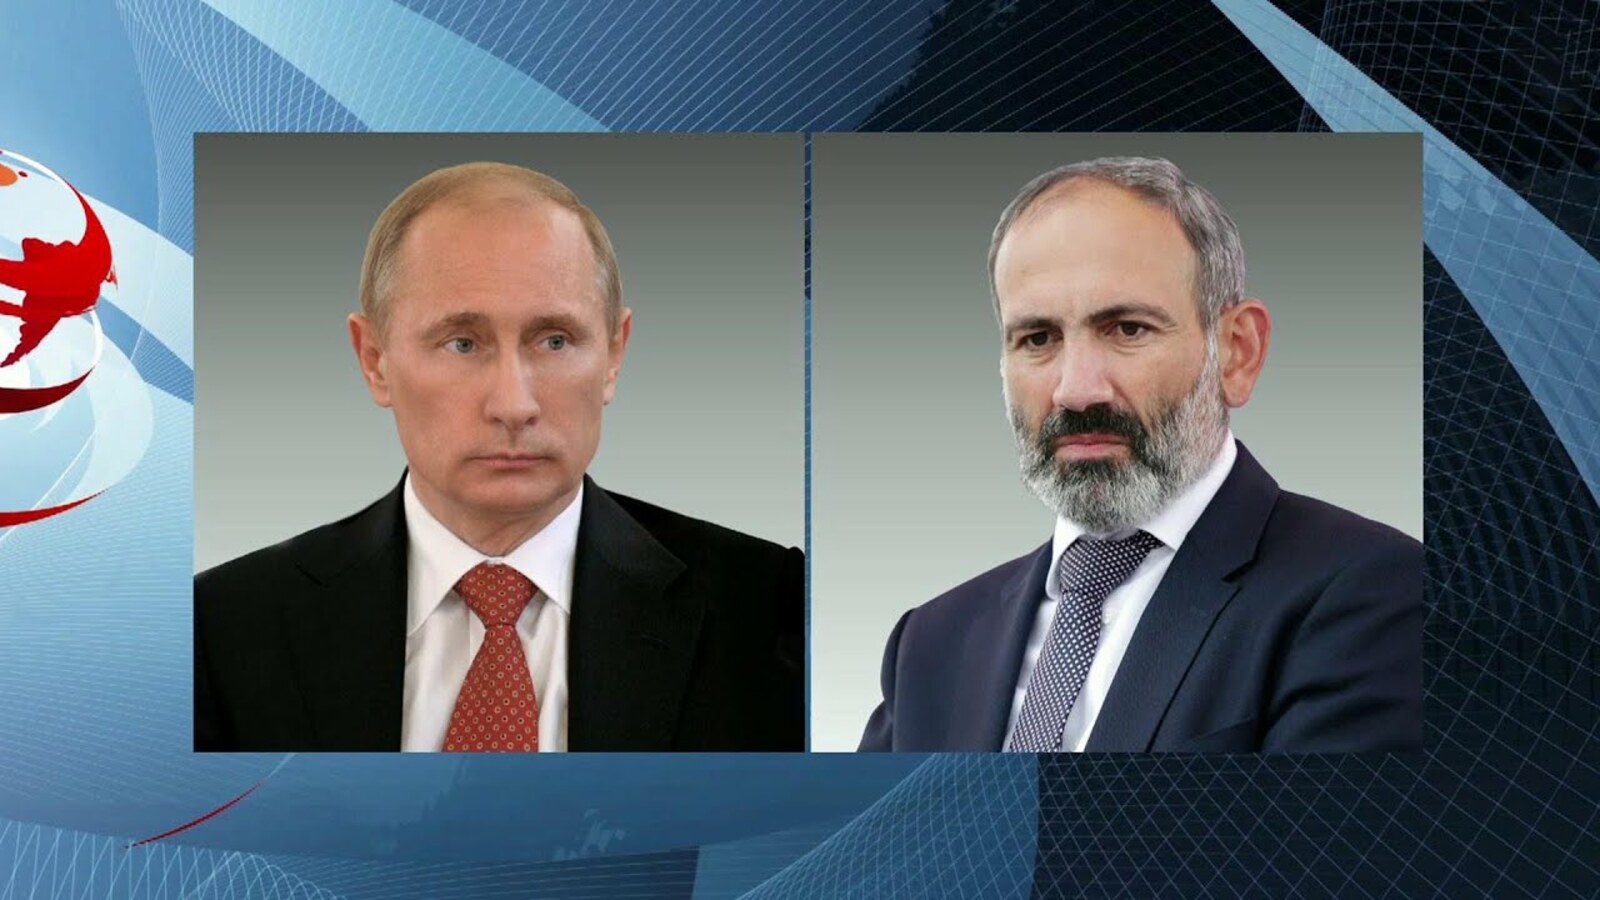 Путин и Пашинян обсудили ситуацию в Нагорном Карабахе